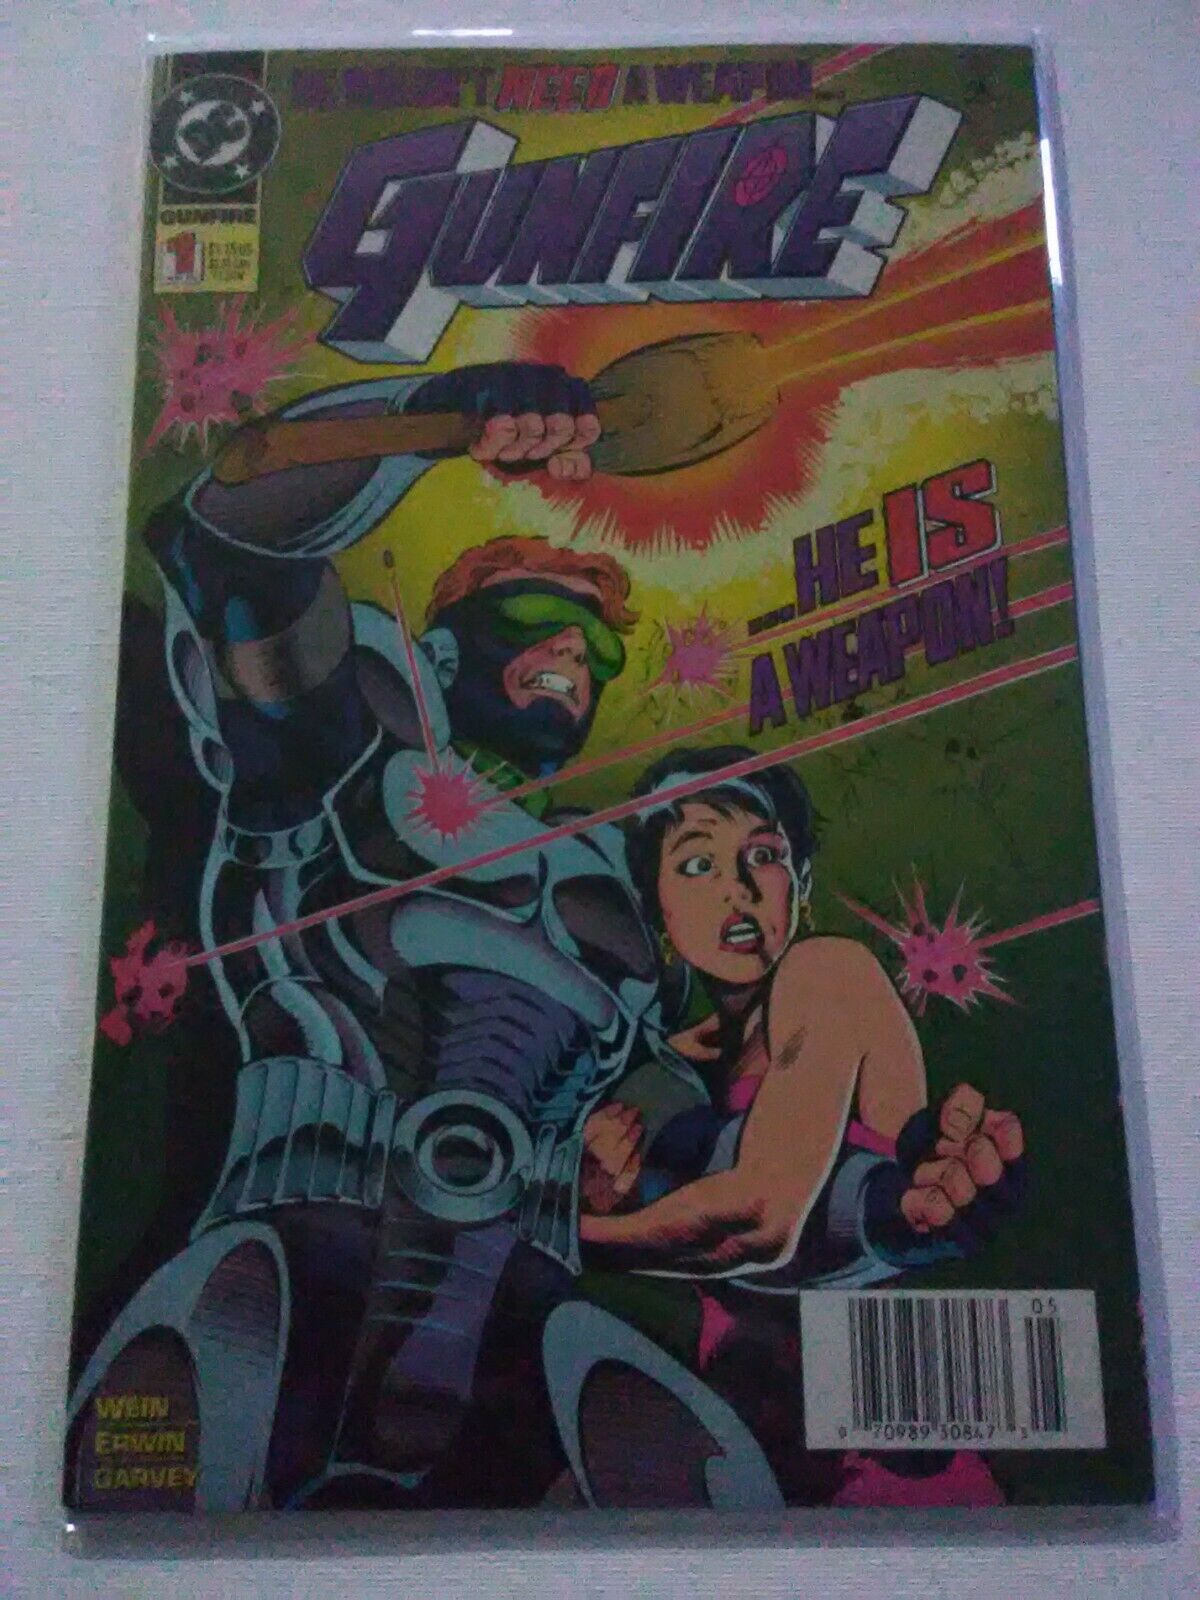 GUNFIRE Issue #1 [DC Comic book] NM+ NEAR MINT PLUS new bag/board HE IS A WEAPON